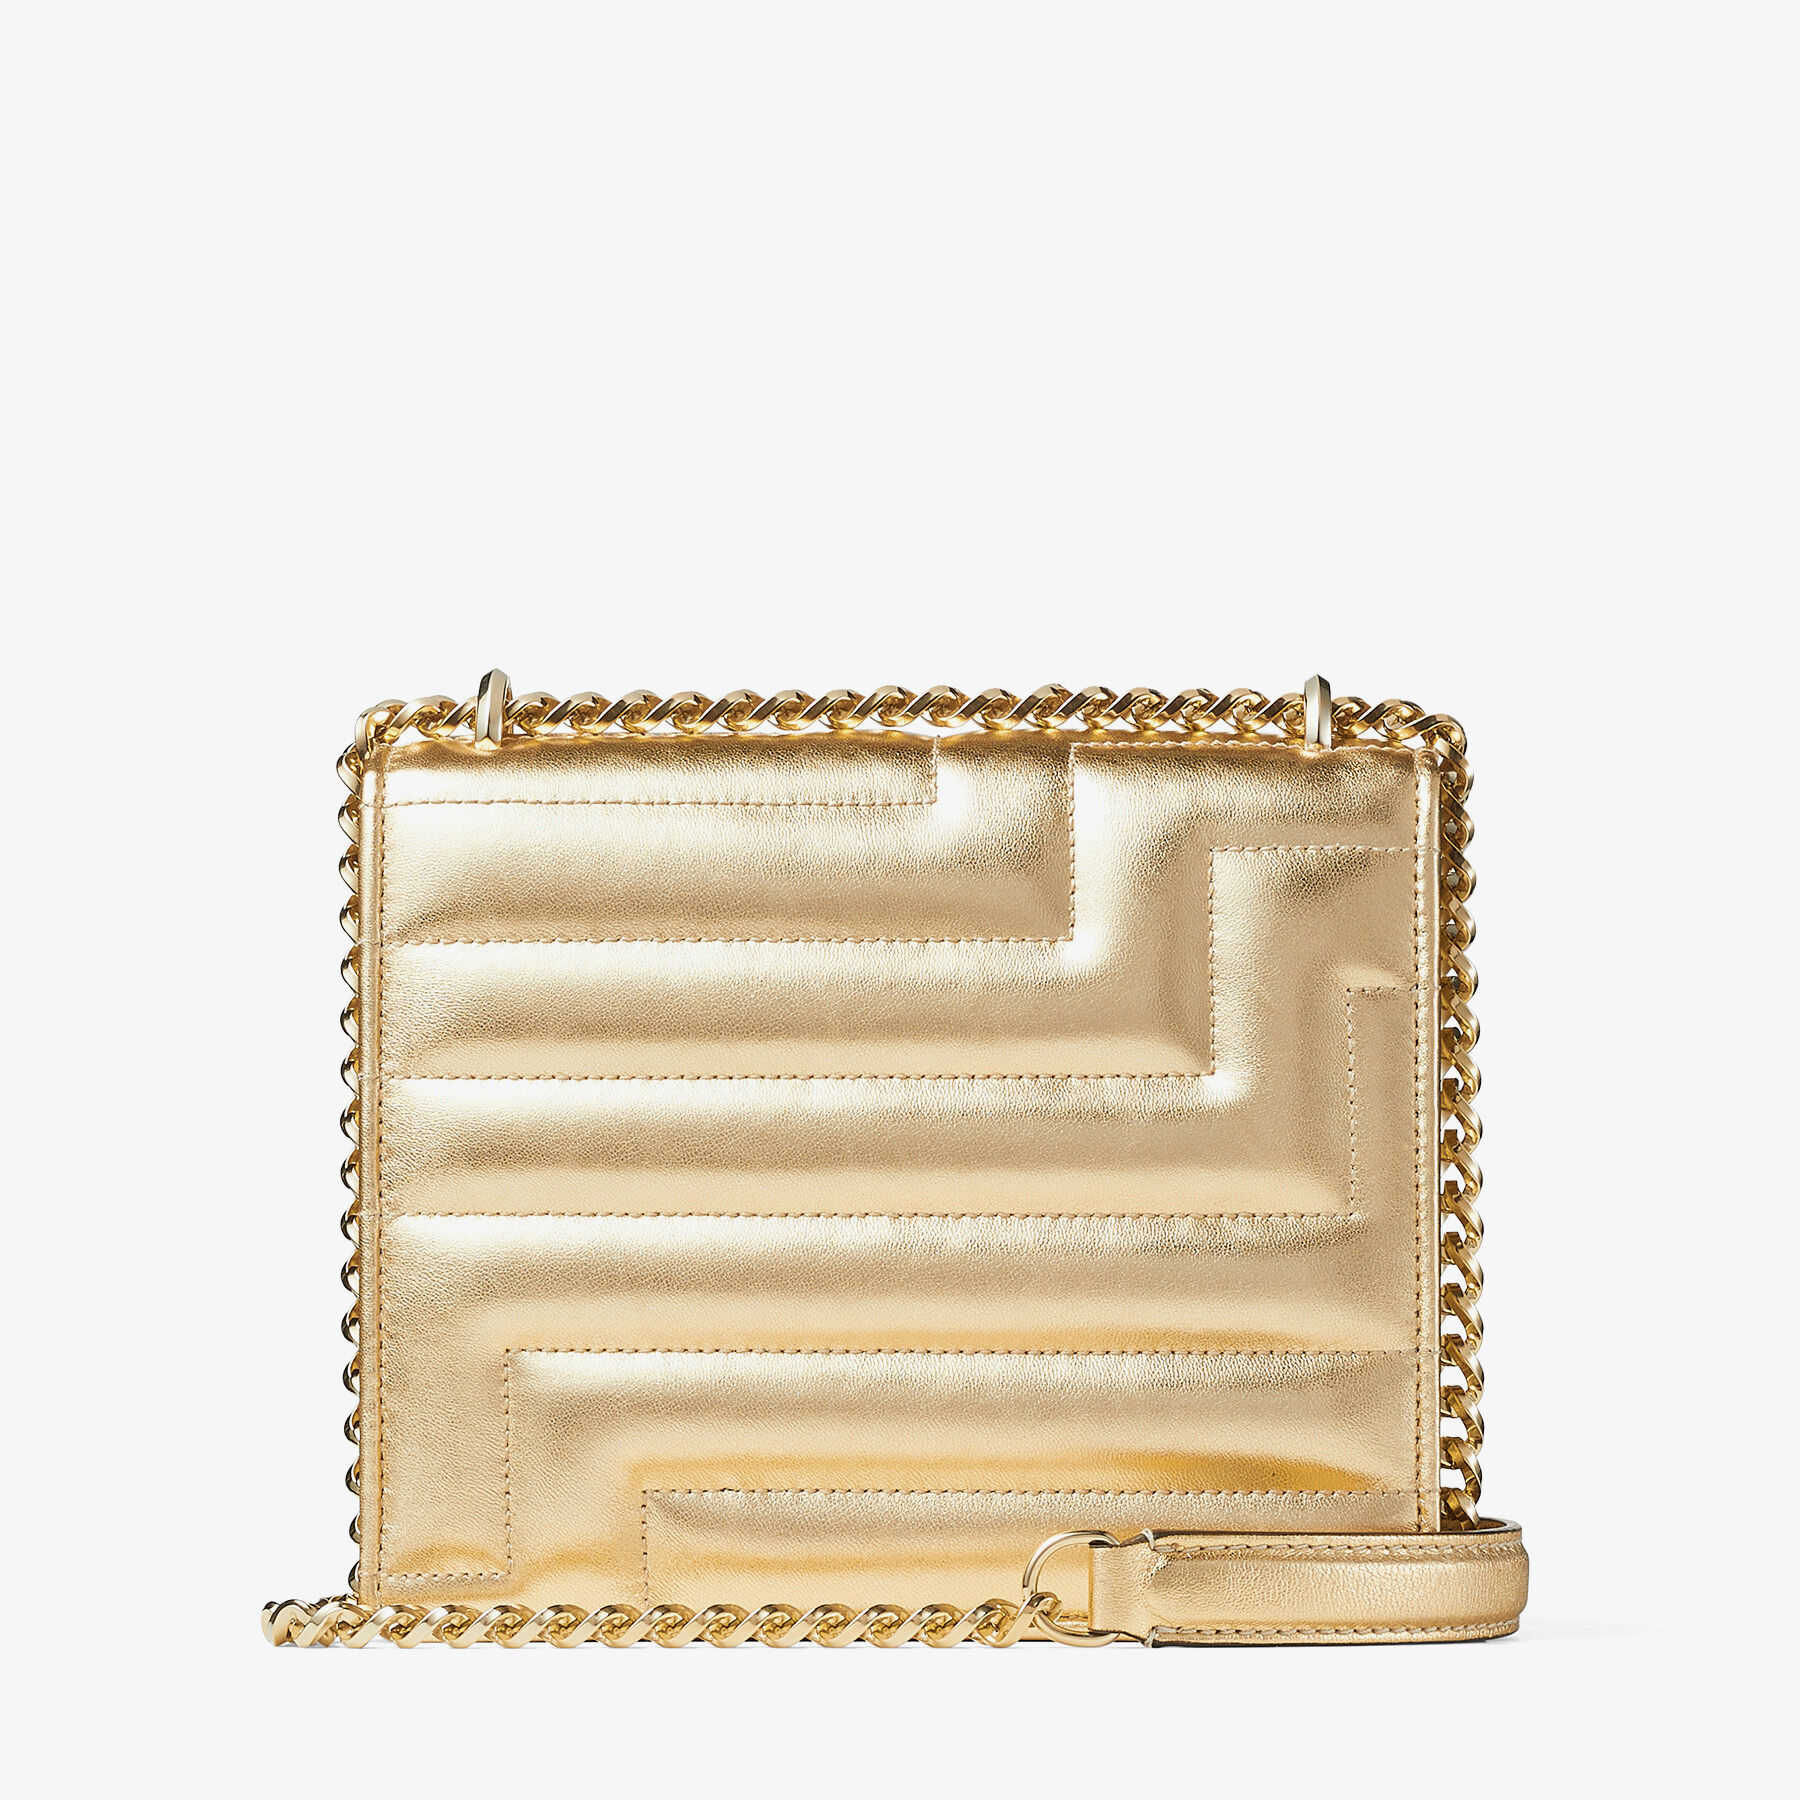 Gold Avenue Metallic Nappa Leather Bag with Light Gold JC Emblem 